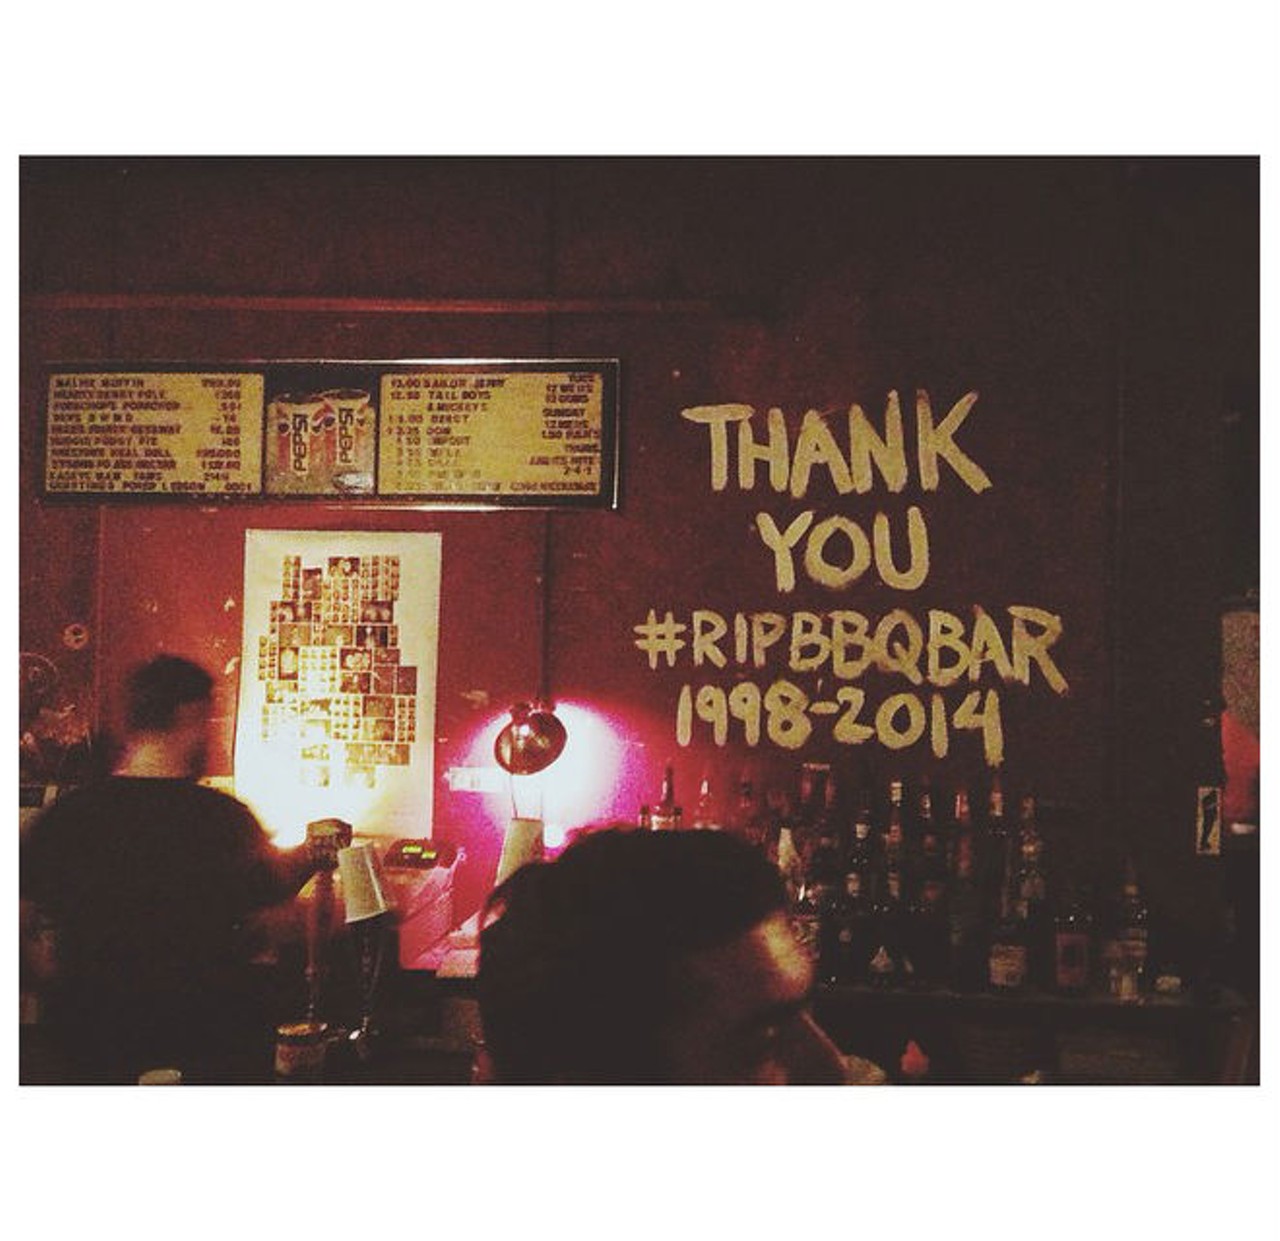 Instagram: lando32750 favorite #ripbbqbar Instagram photos to remember Bar-BQ-Bar by